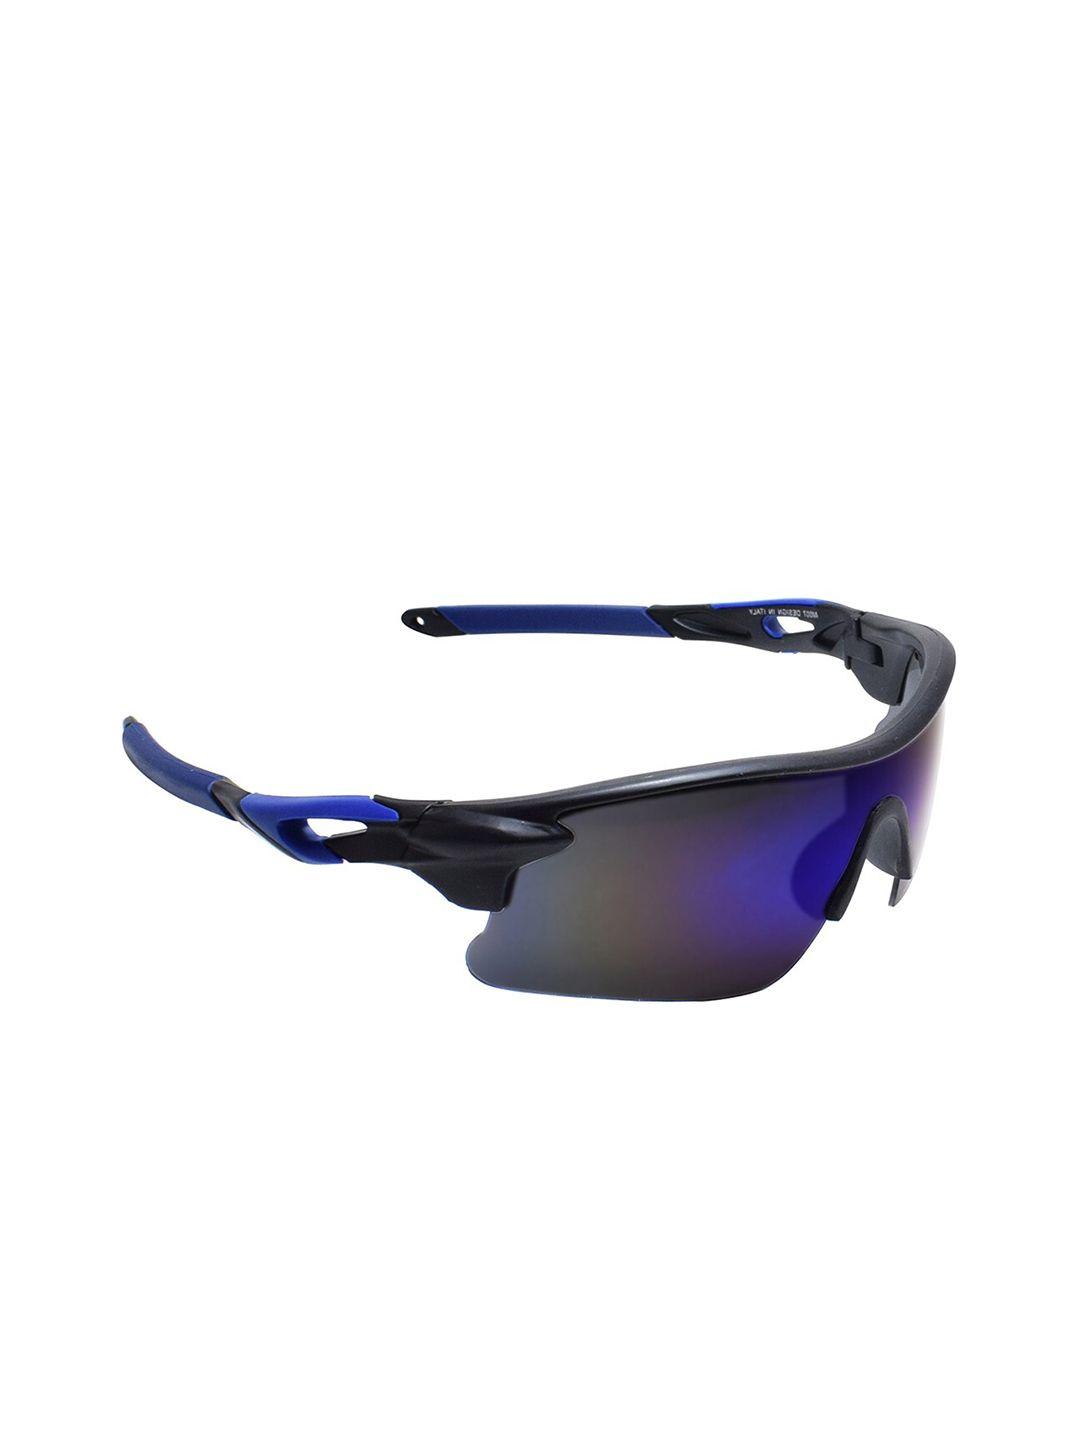 peter jones eyewear unisex blue lens & blue uv protected sports sunglasses m-007bl